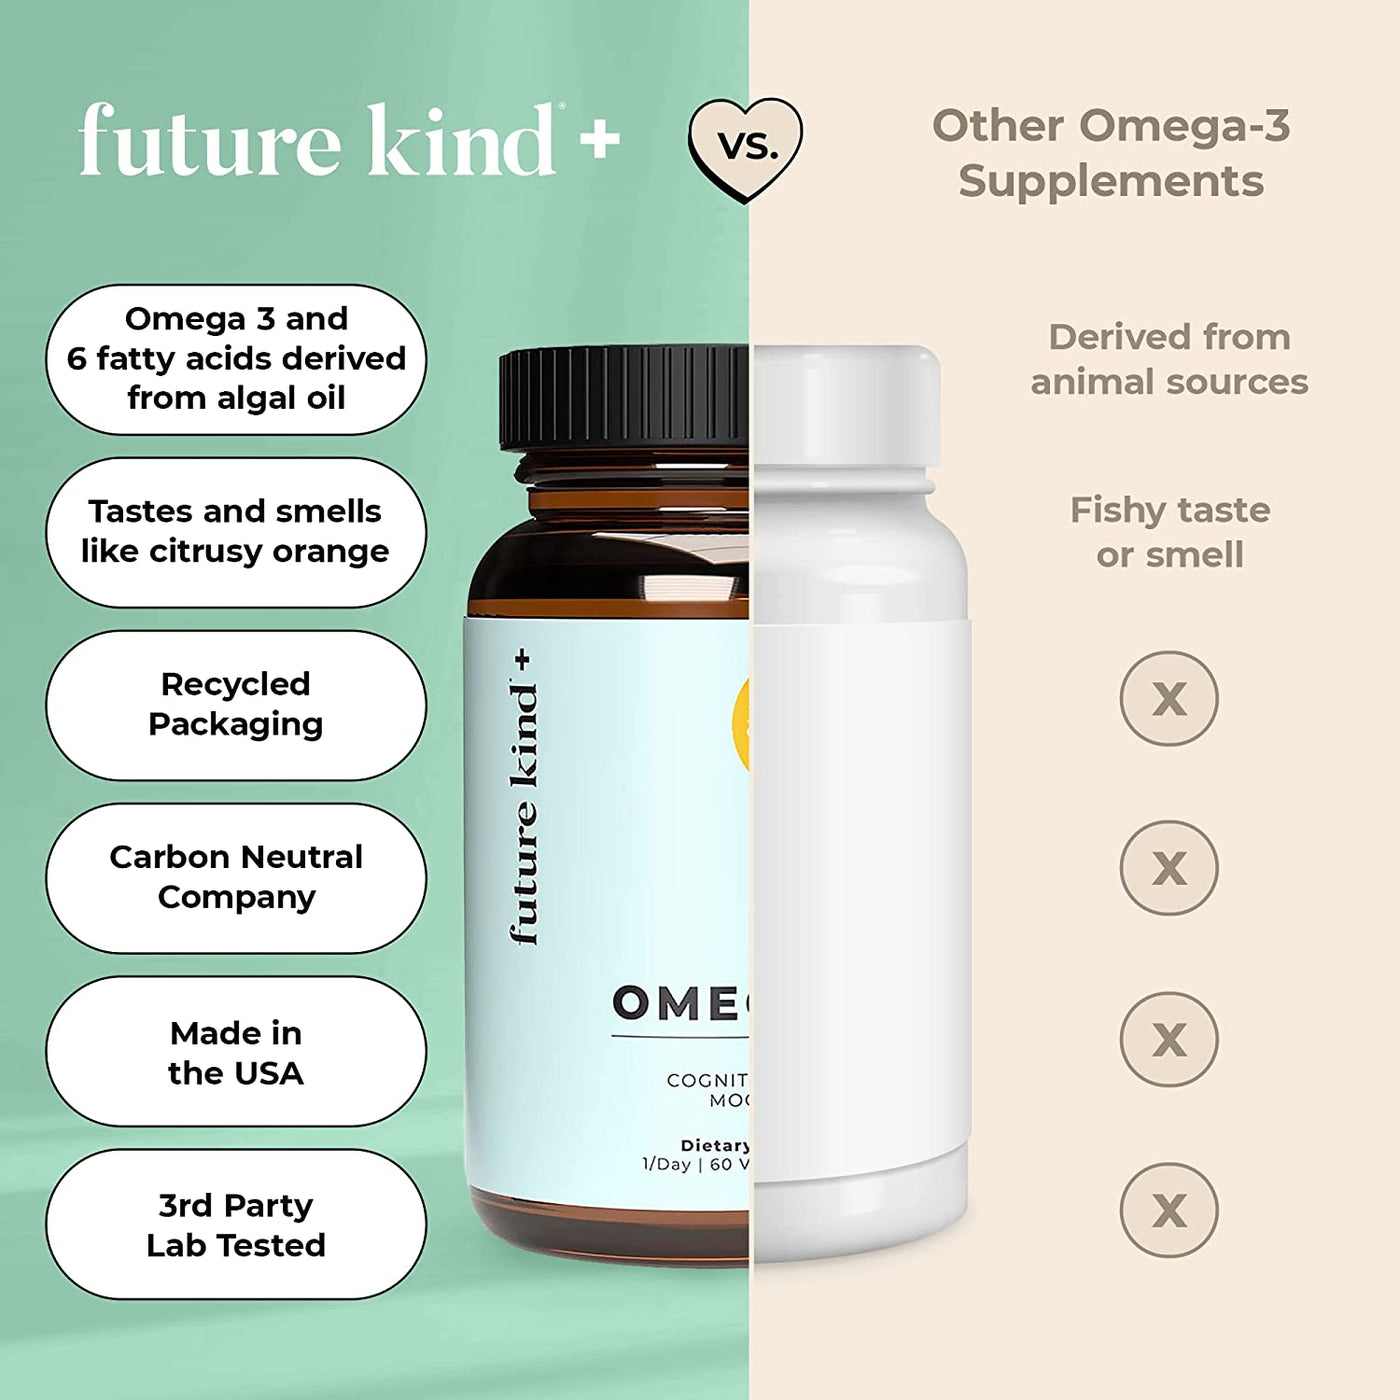 Vegan Omega 3 Supplement Comparison Image